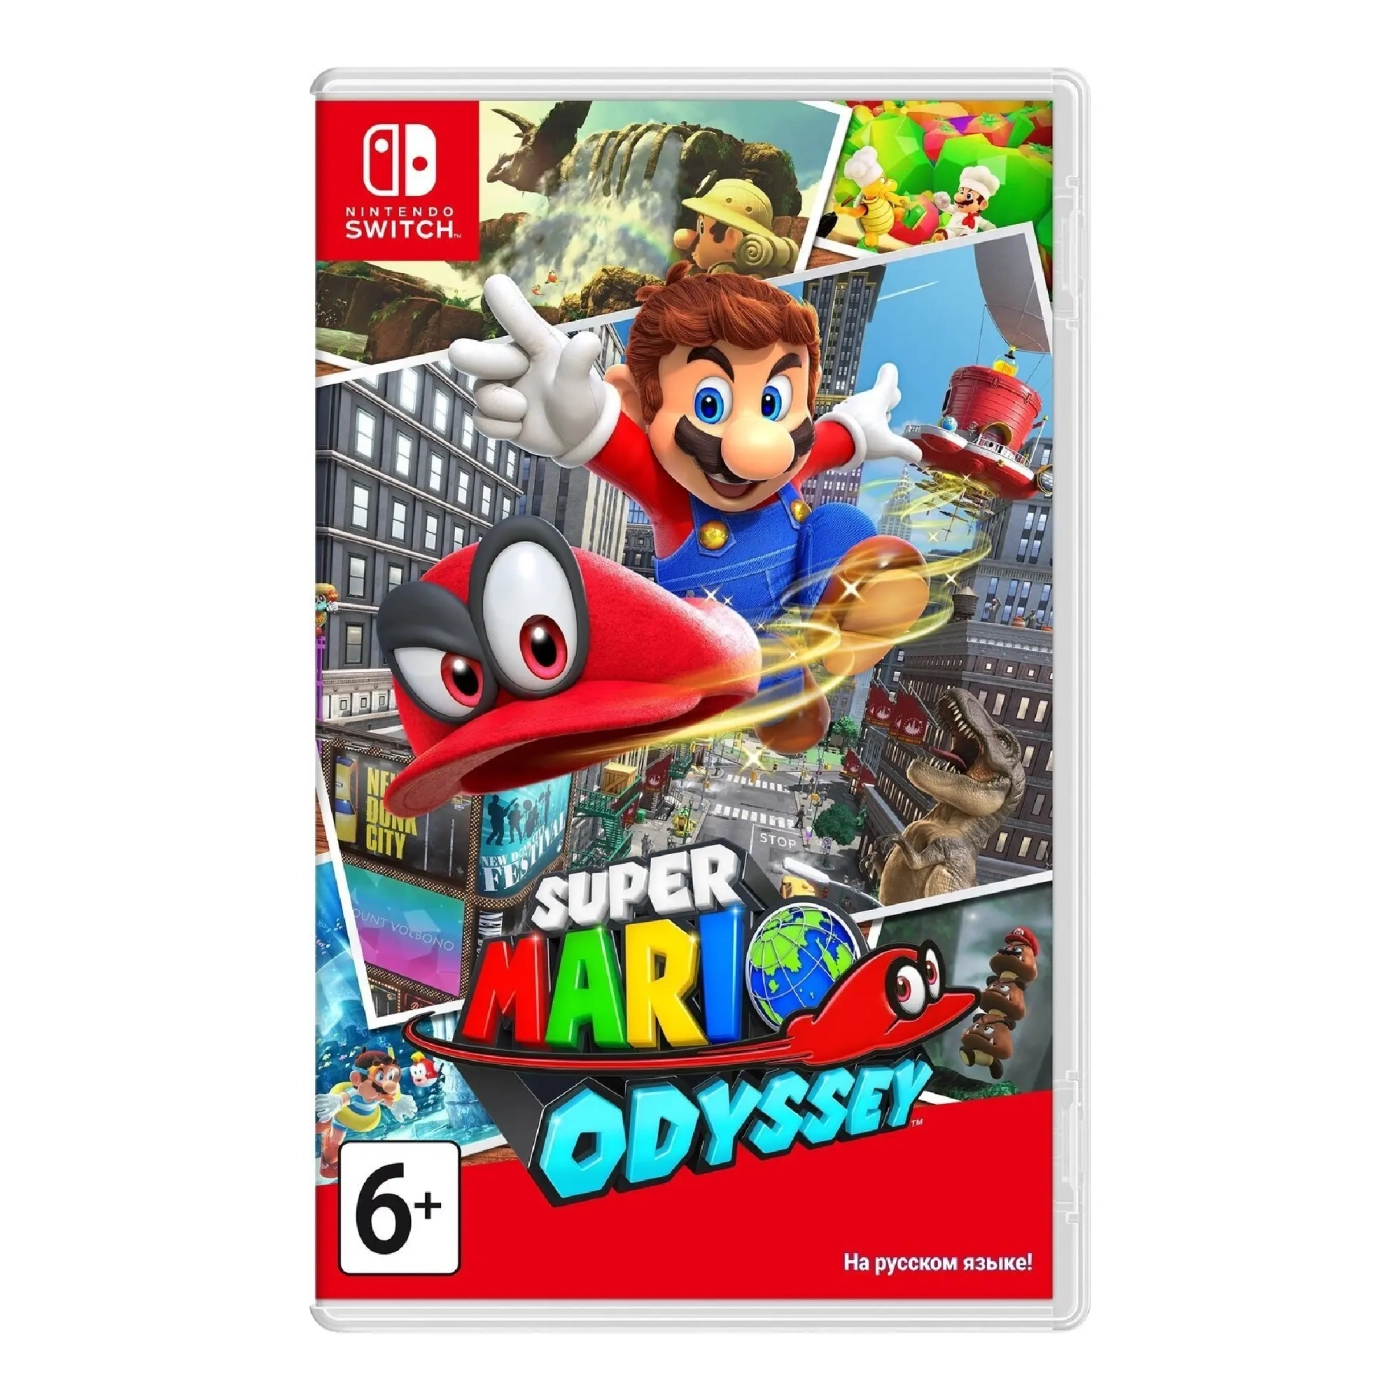 Купити Гра Nintendo Super Mario Odyssey, картридж (045496420901) - фото 1